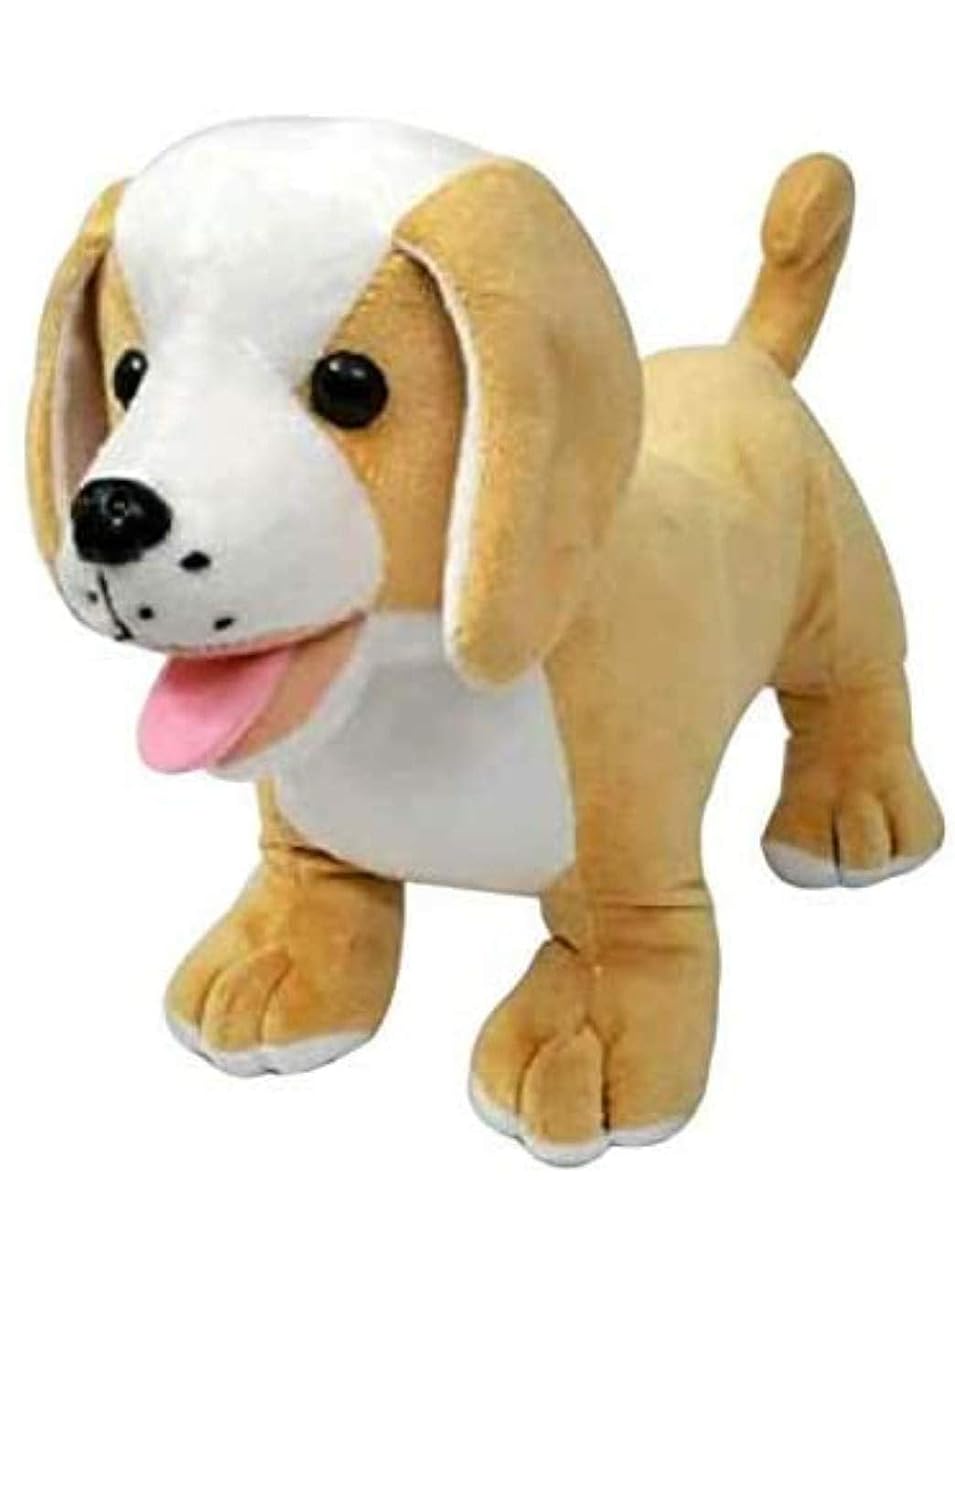 FunZoo Soft Plush Stuffed Animal Cute Dwarfy Pug Plush Toy Stuffed Animal Soft Toys for Baby Kids 45 cm